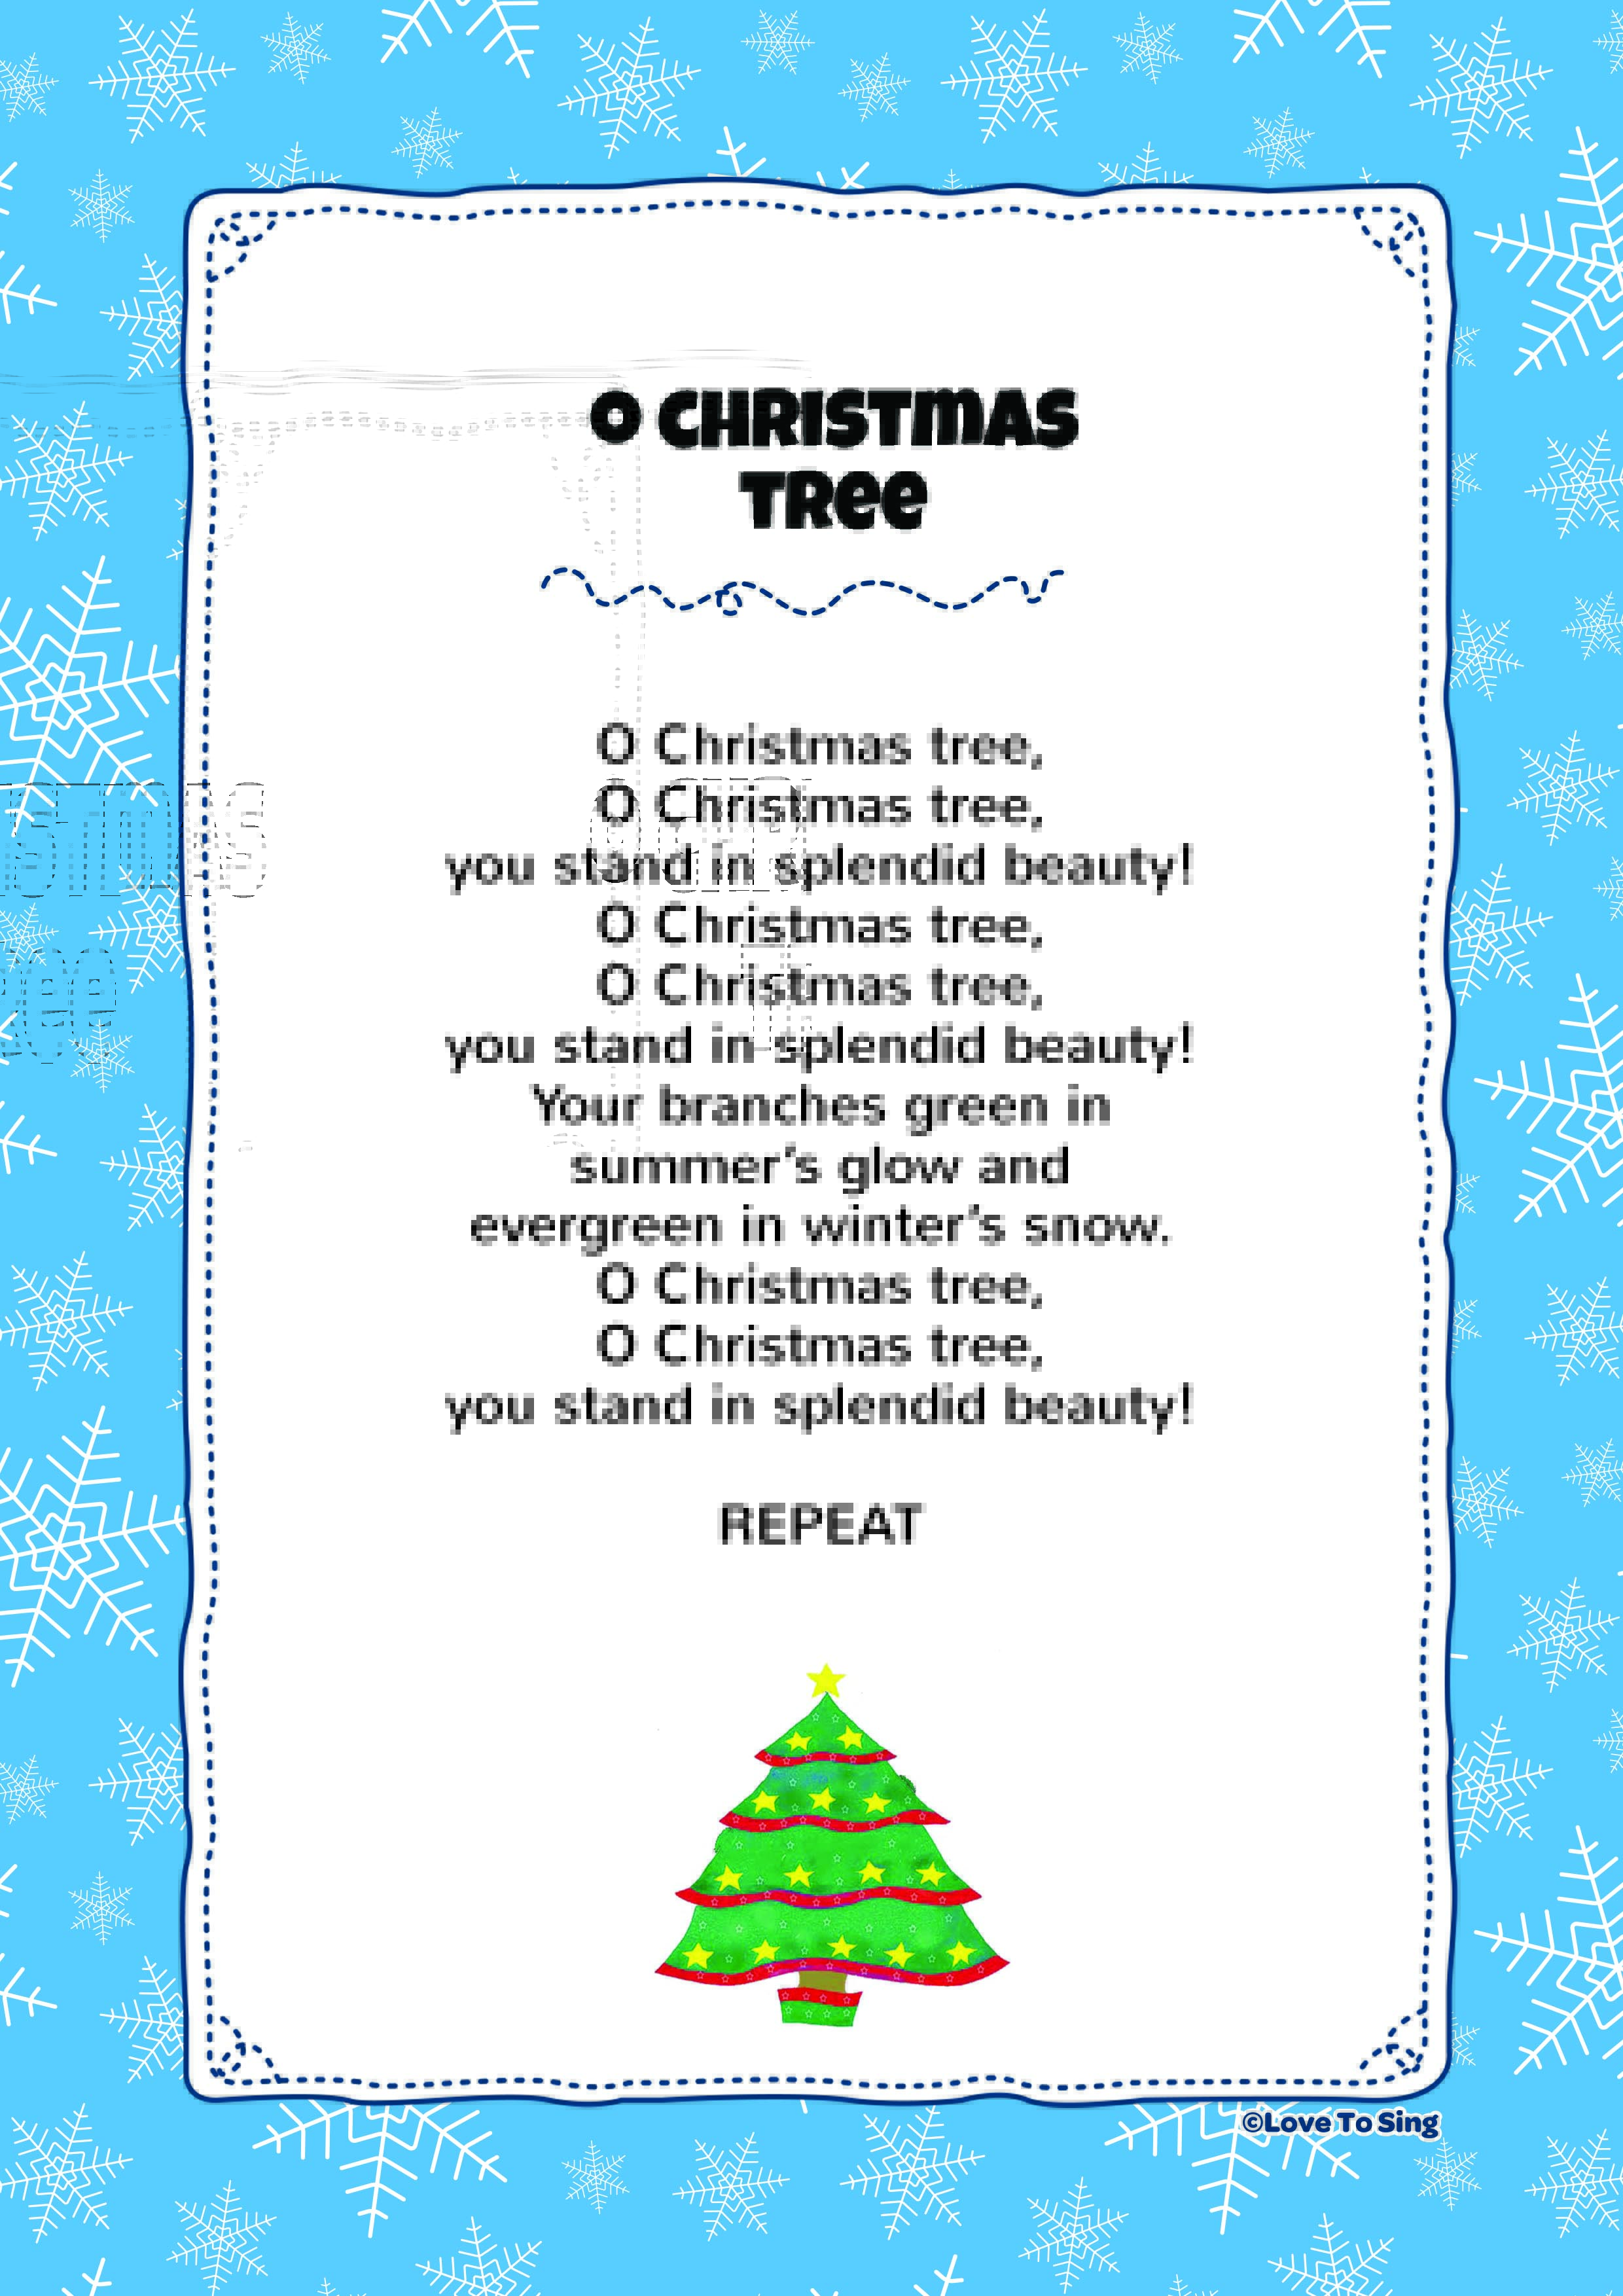 O Christmas Tree | Kids Video Song with FREE Lyrics & Activities!